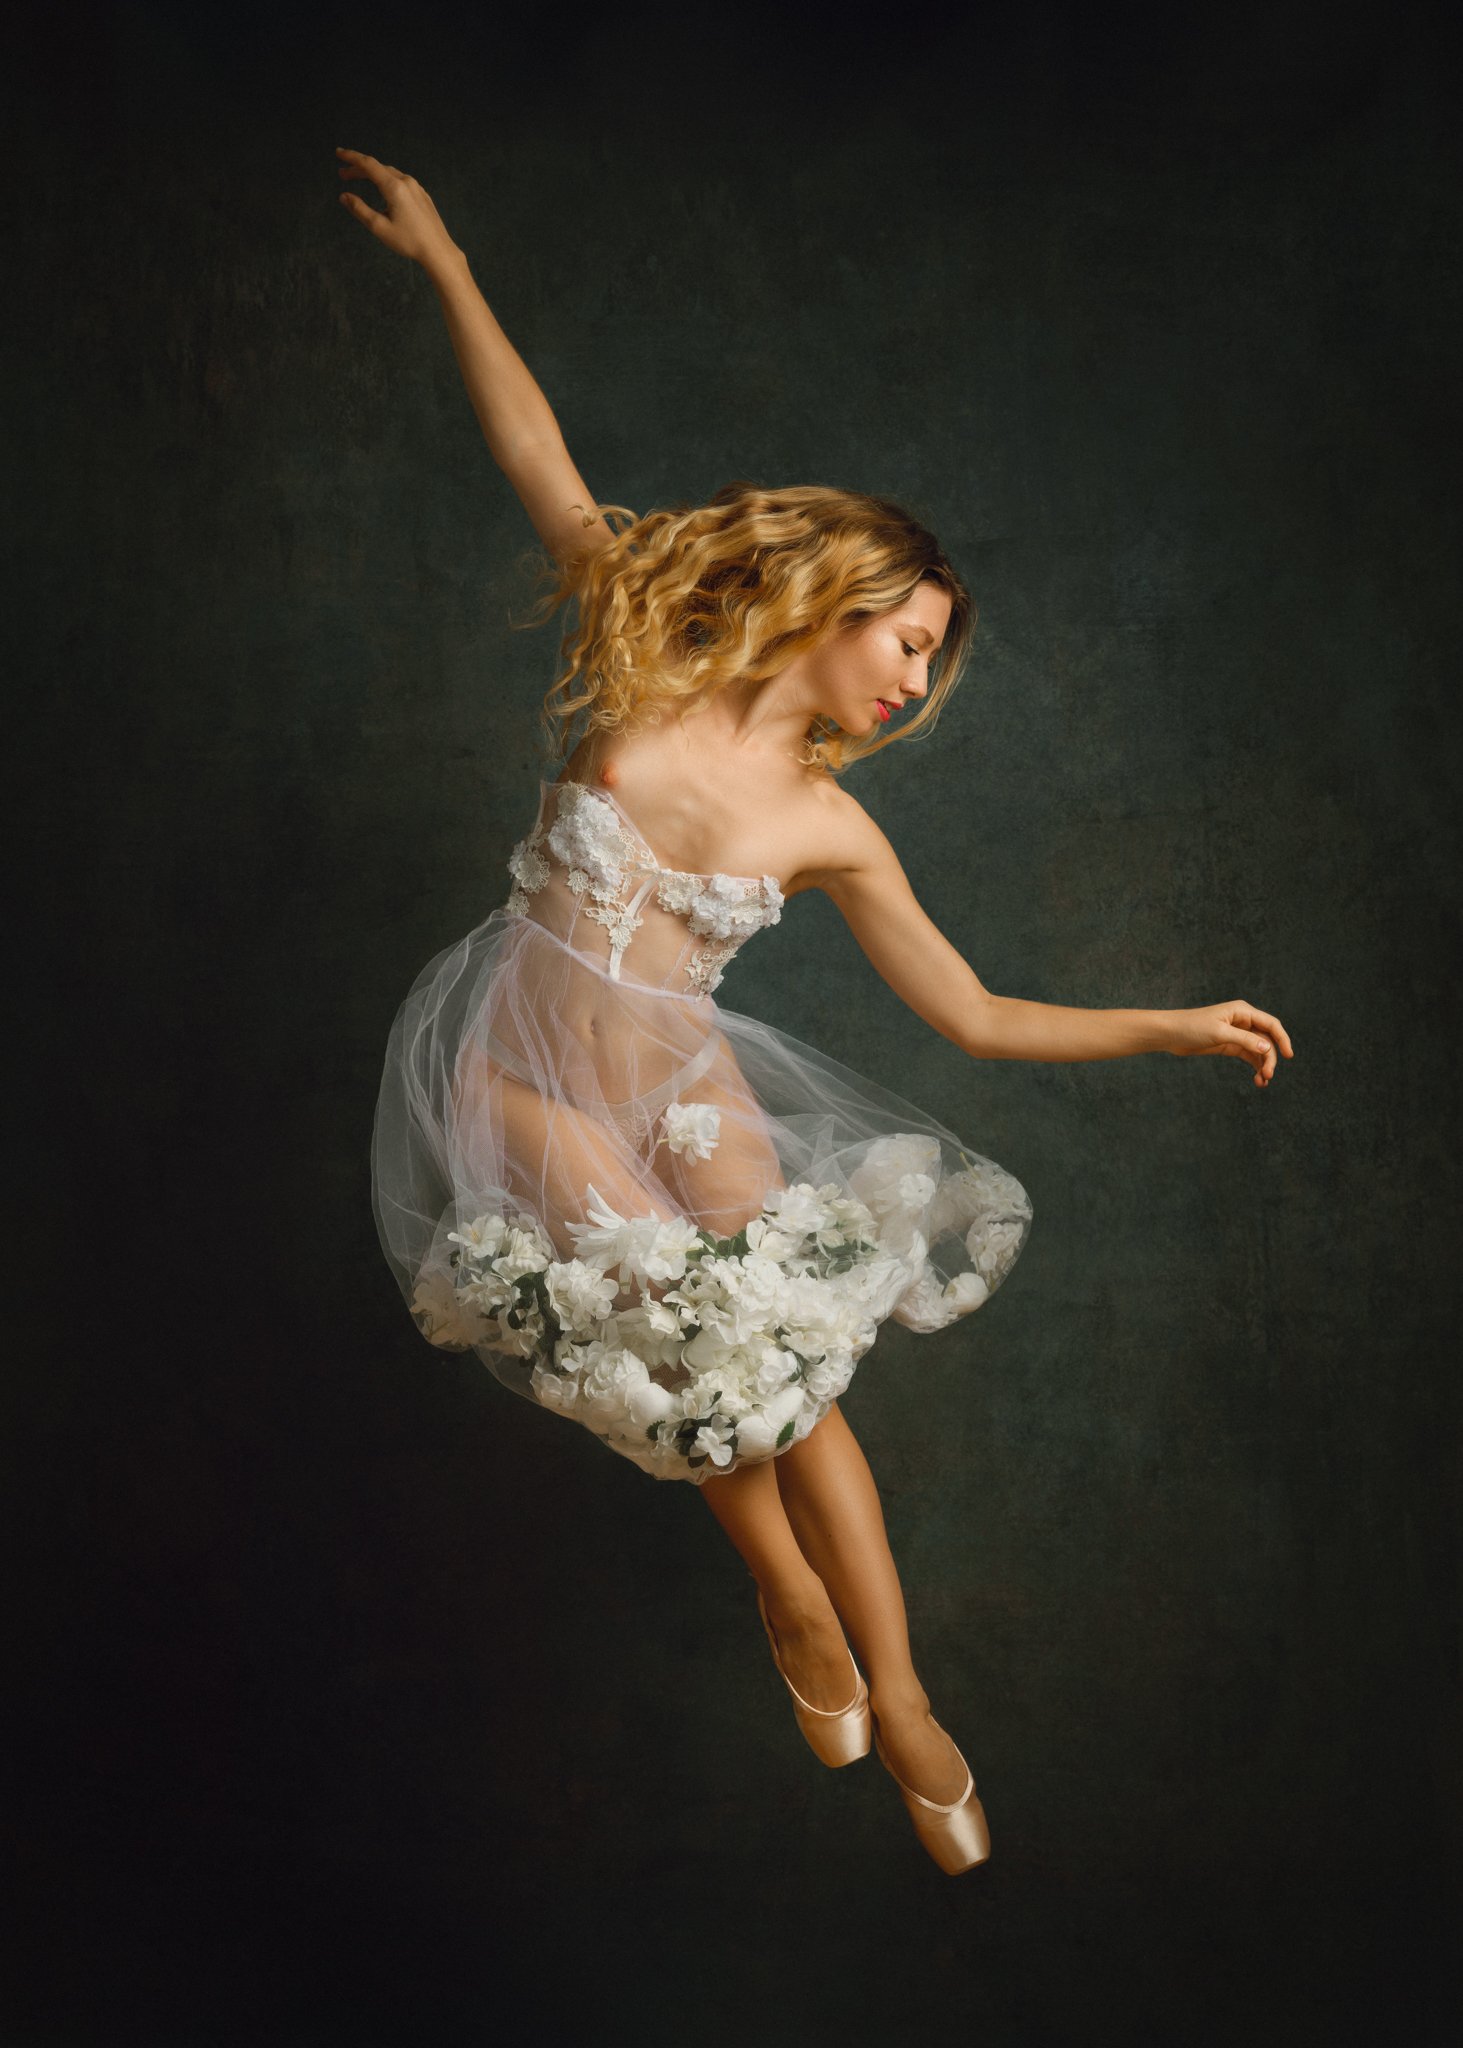 beauty portrait girl young female blonde dancer ballerina fashion, Saulius Ke